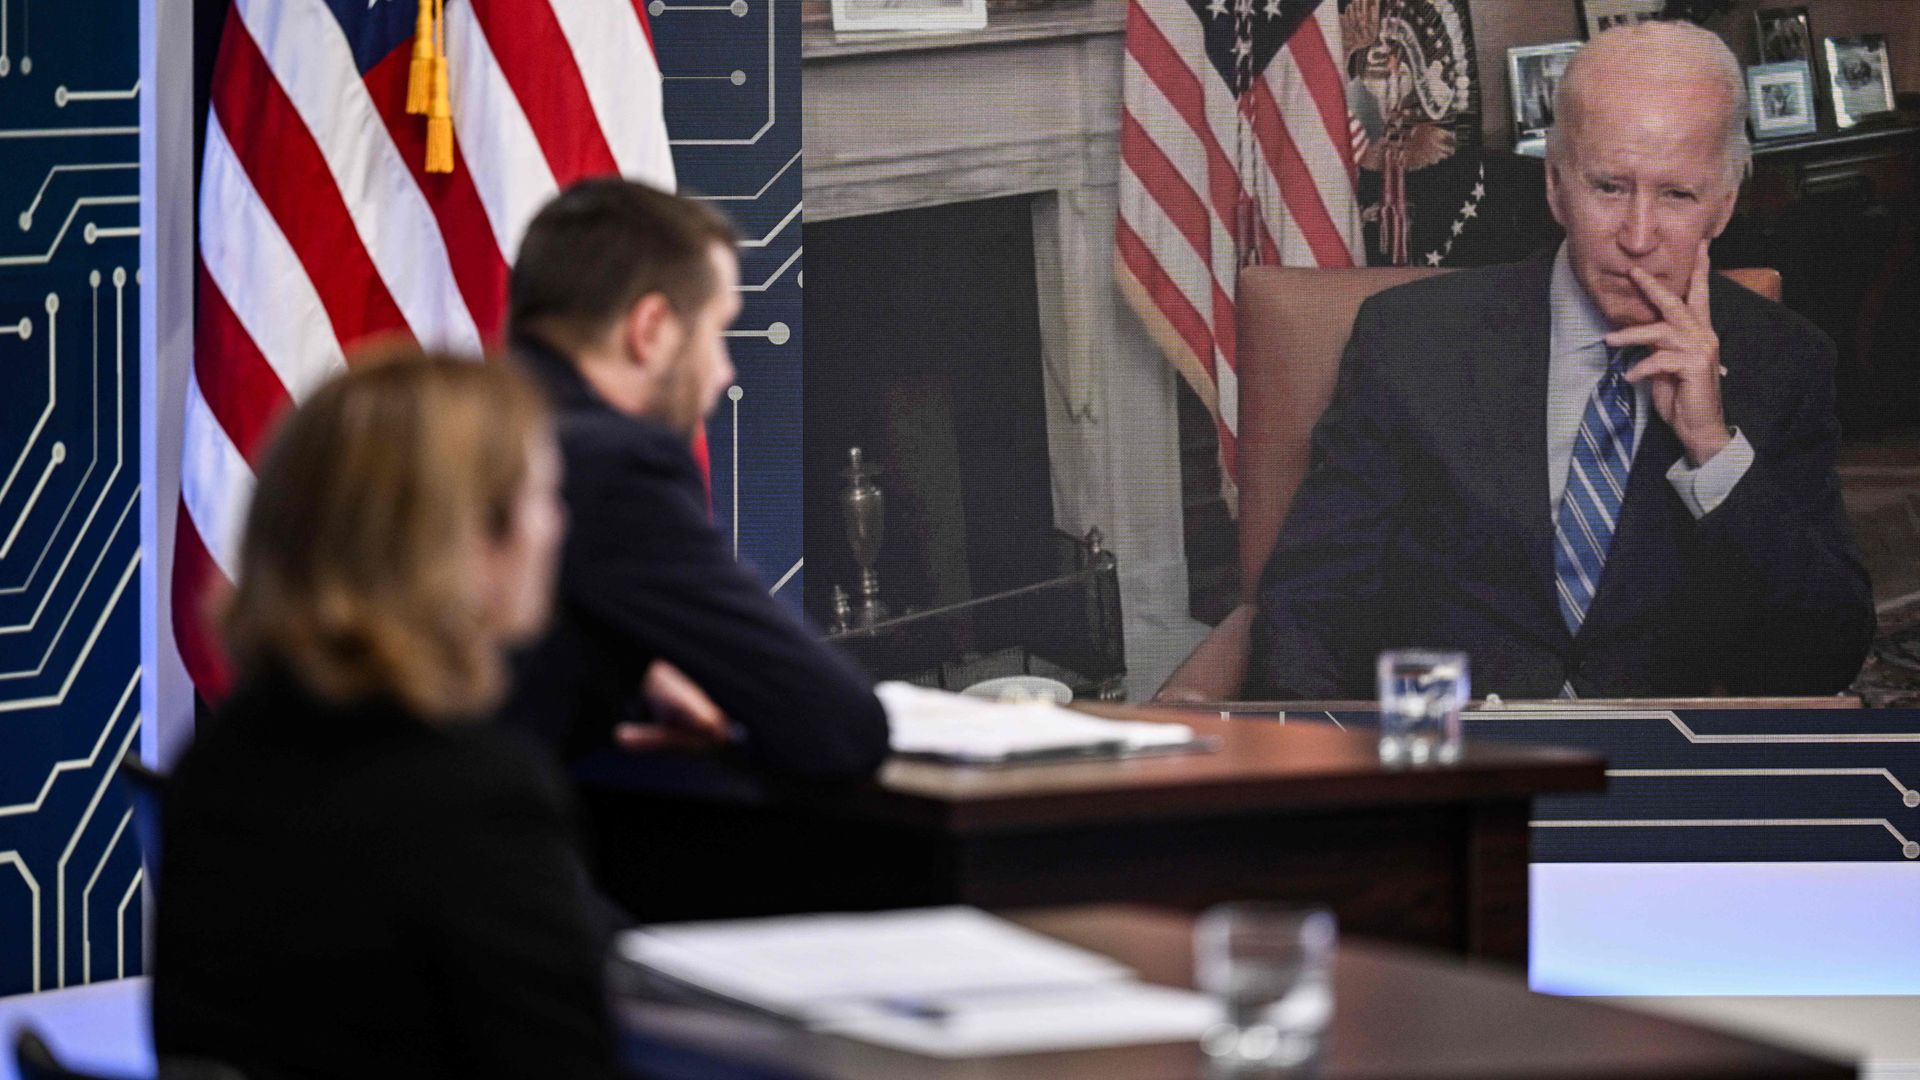 President Biden participates in a meeting virtually on Tuesday.